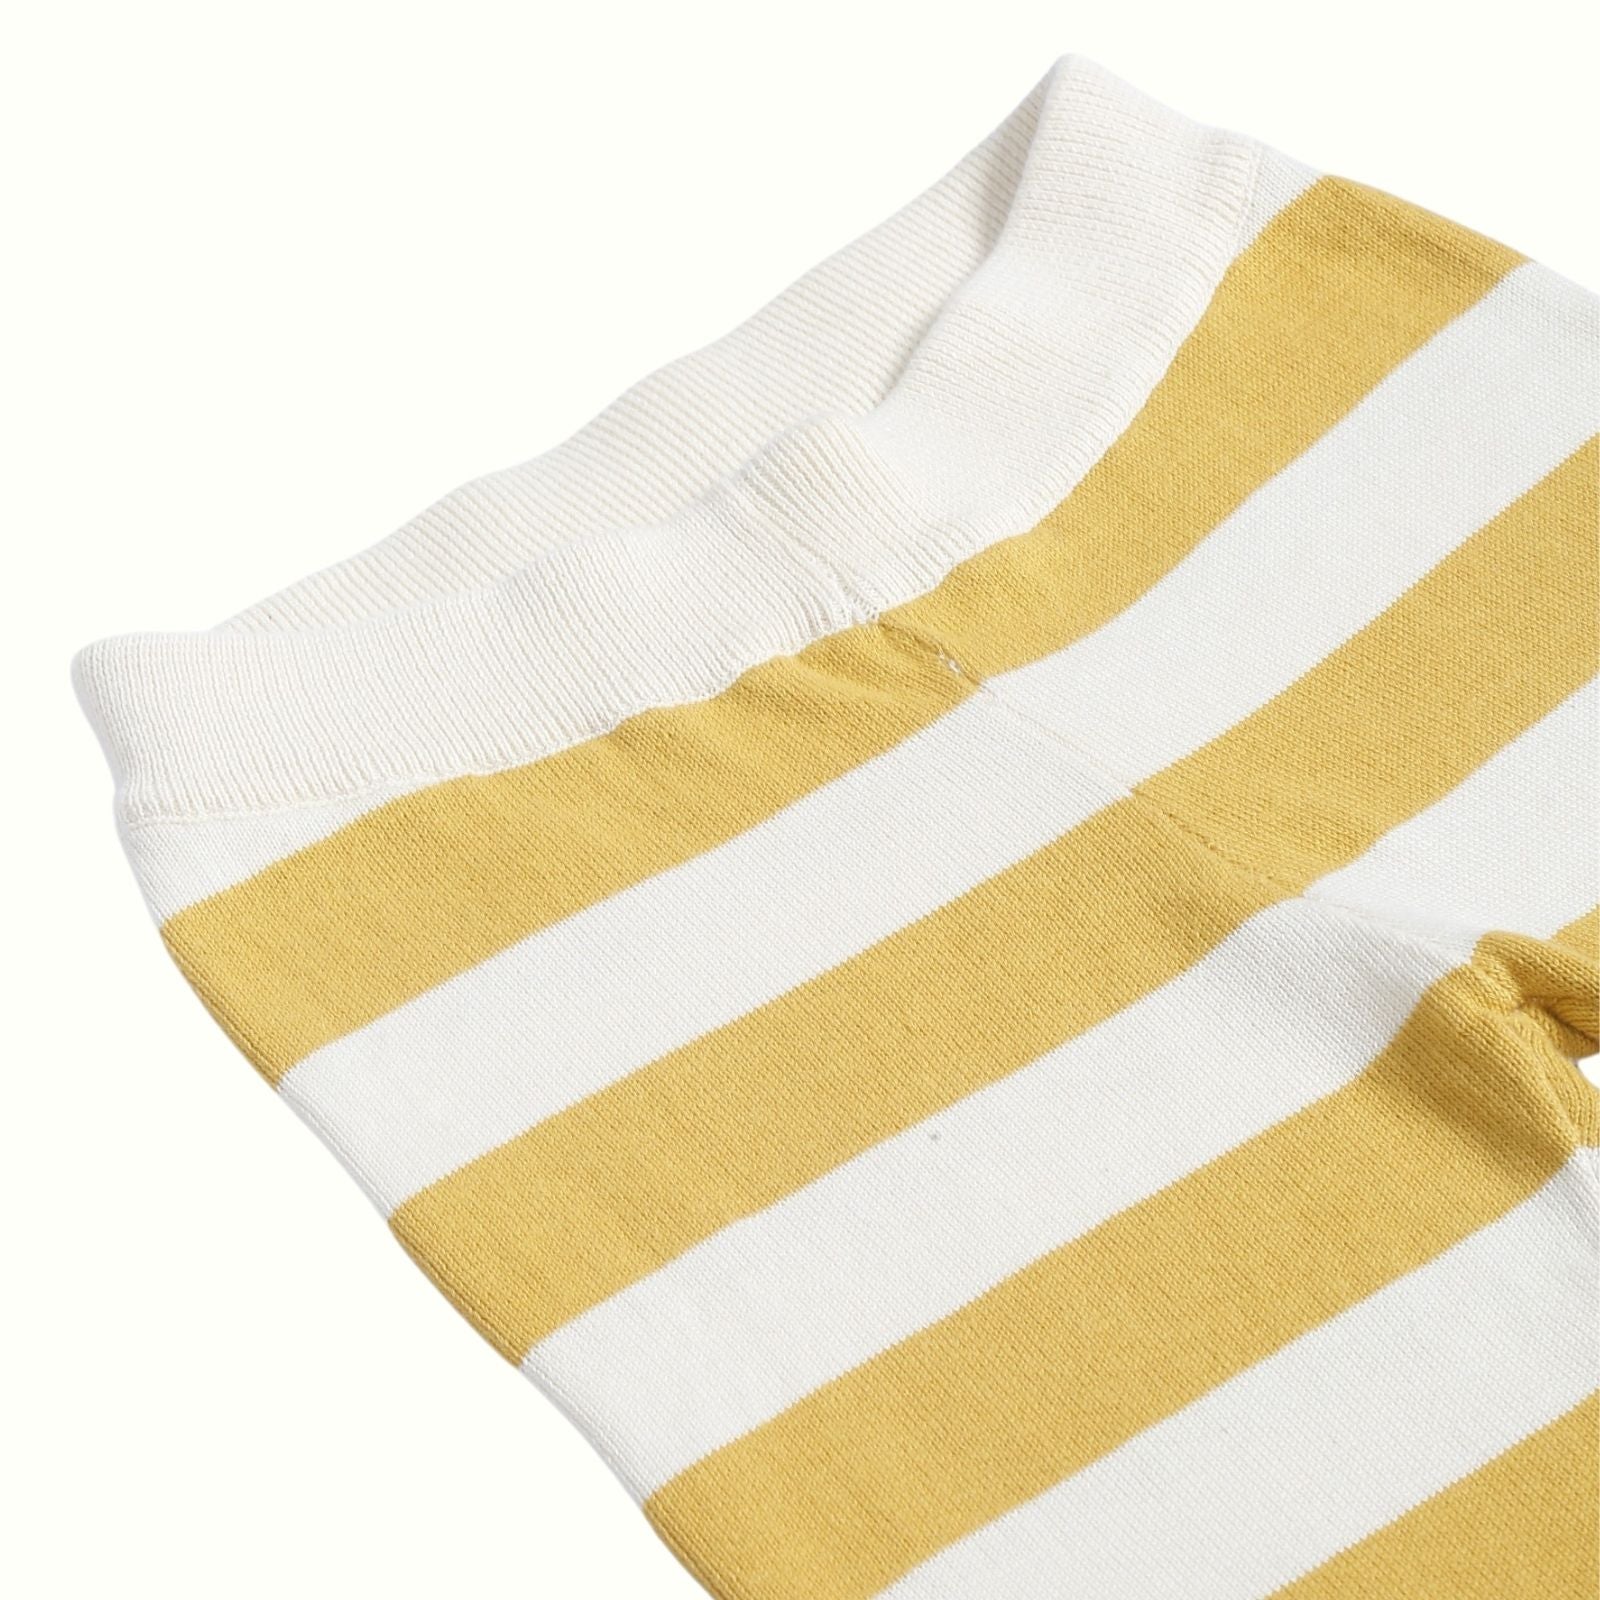 Greendeer Yellow & Green Stripe 100% Cotton Diaper Lowers Set of 2